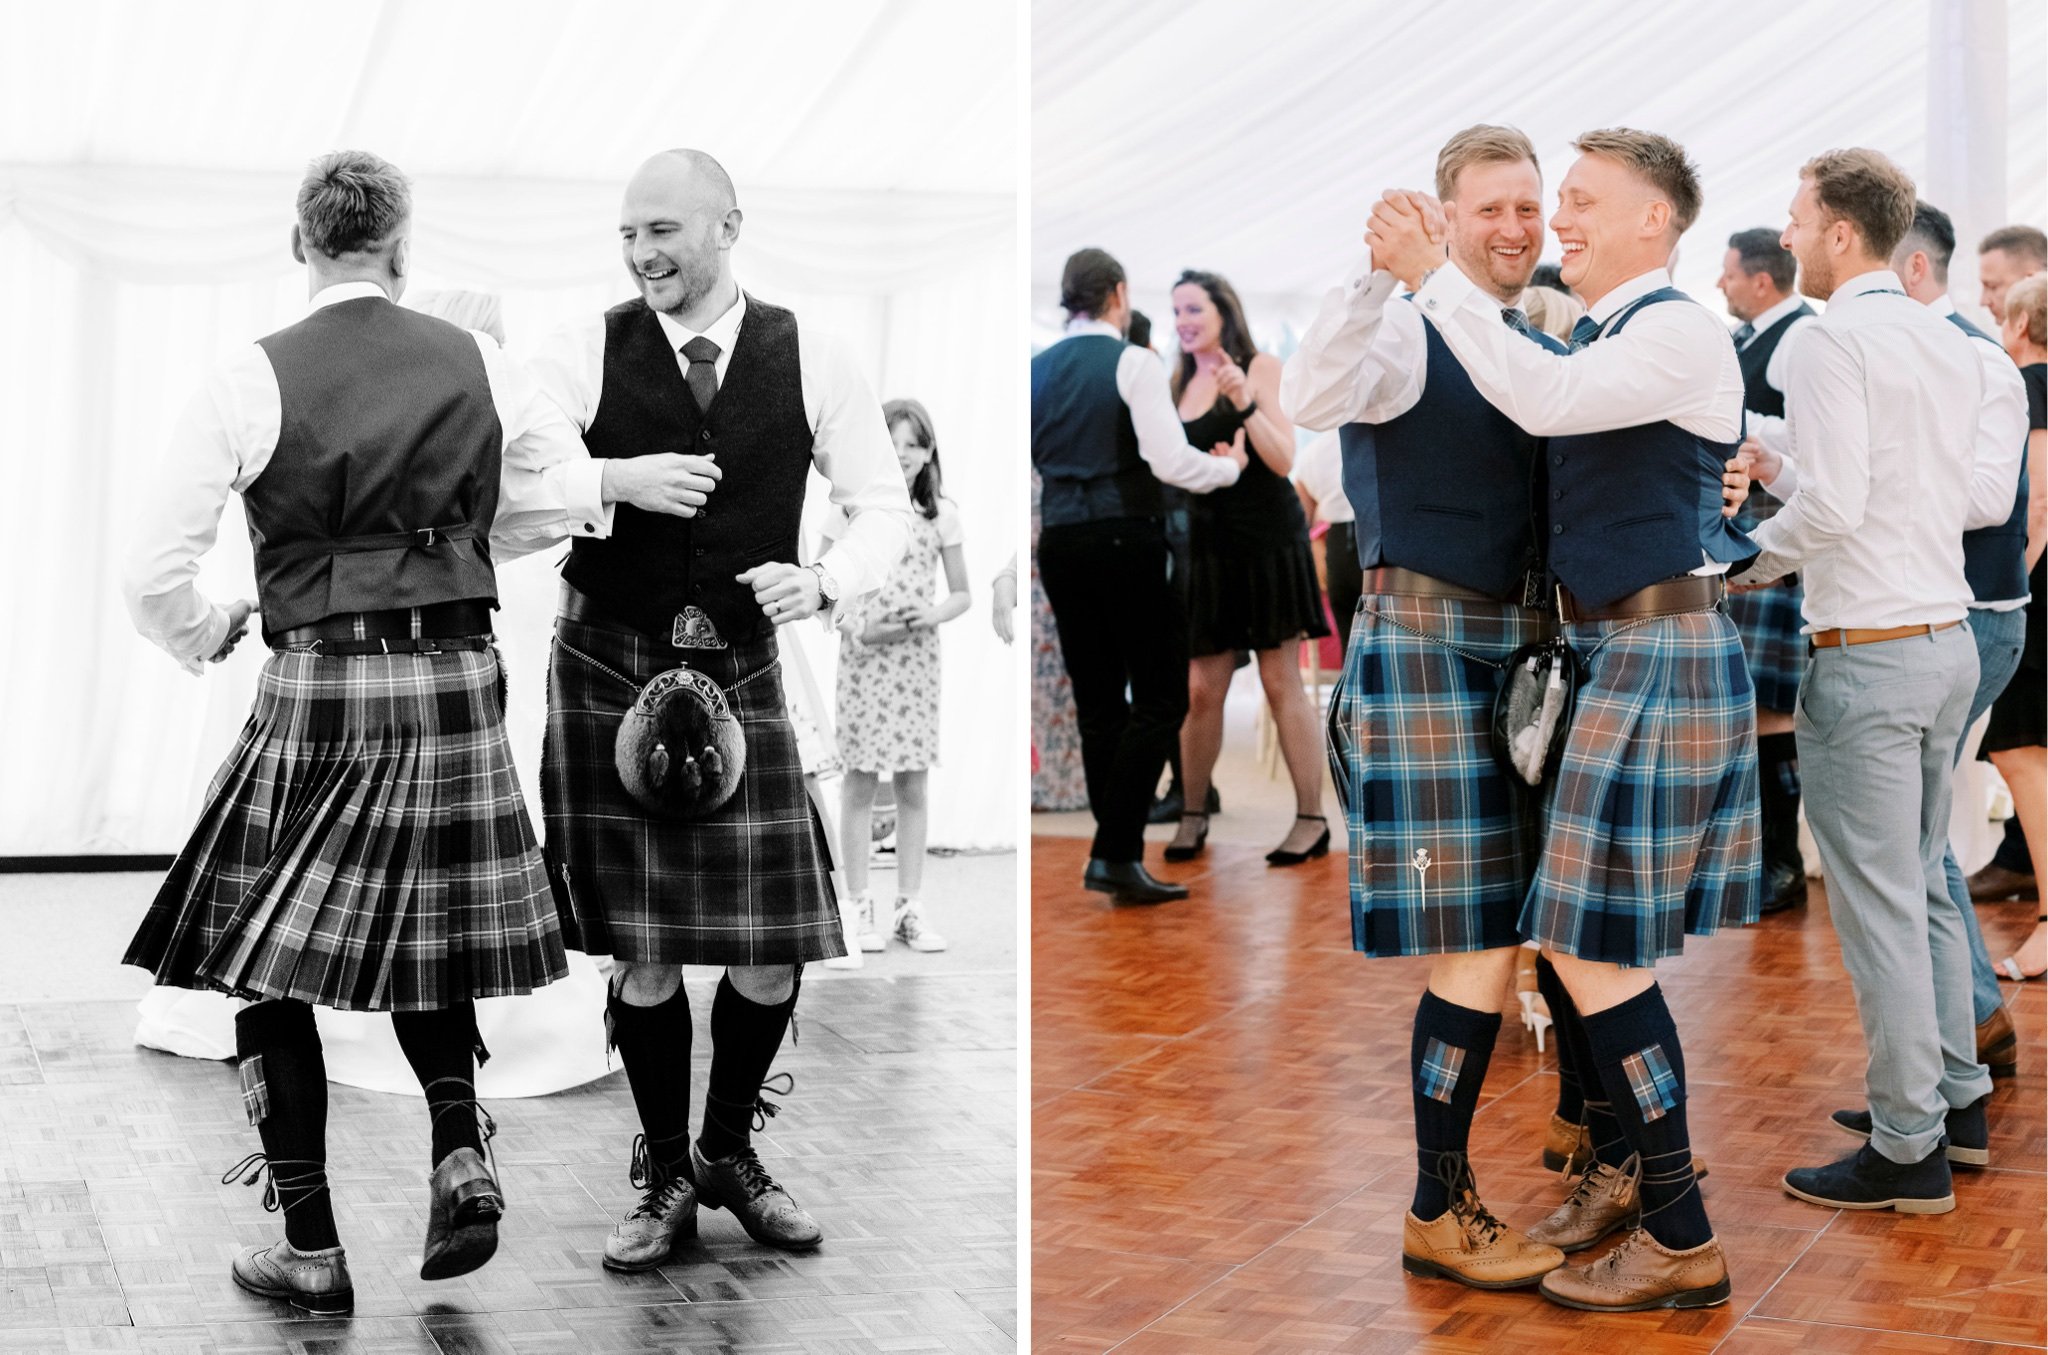 68_springkell-house-wedding-photographer-dumfries-scotland-groom-dancing_springkell-house-wedding-photographer-dumfries-scotland-guests-dancing.jpg